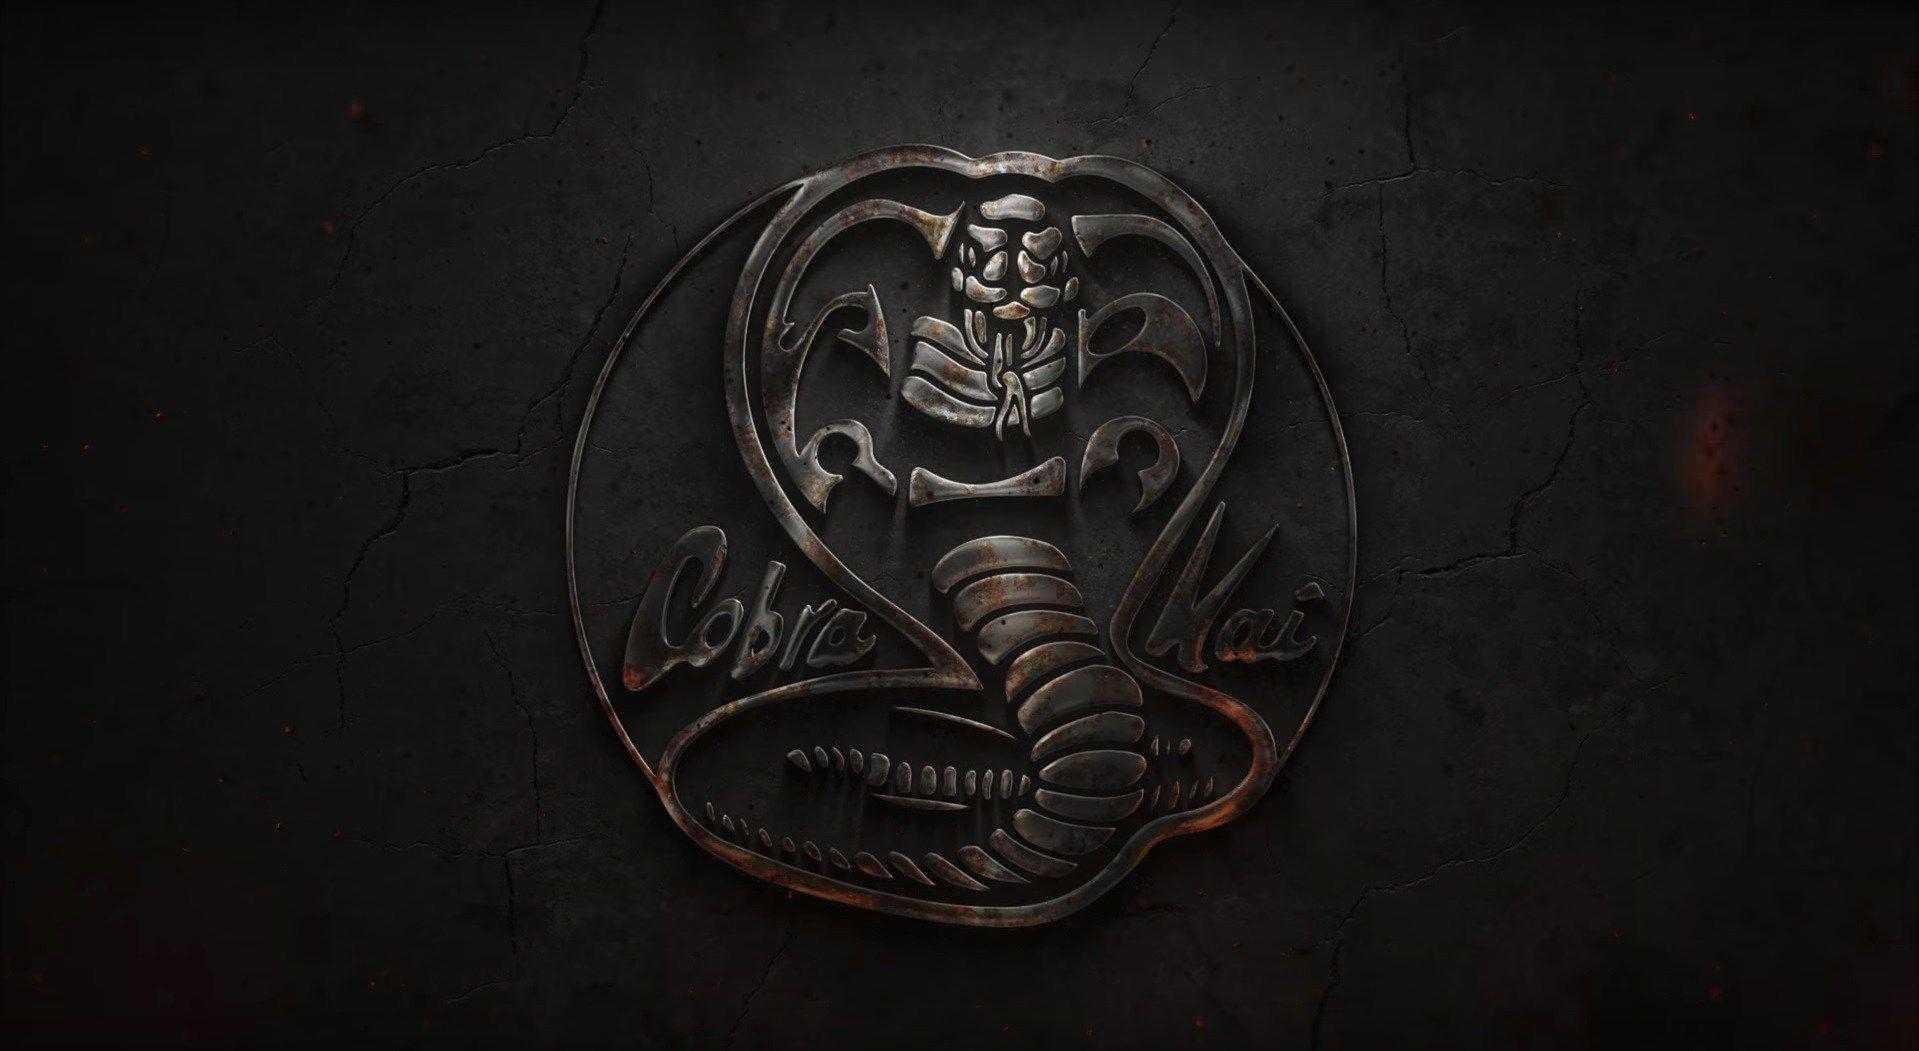 Cobra Kai Wallpaper